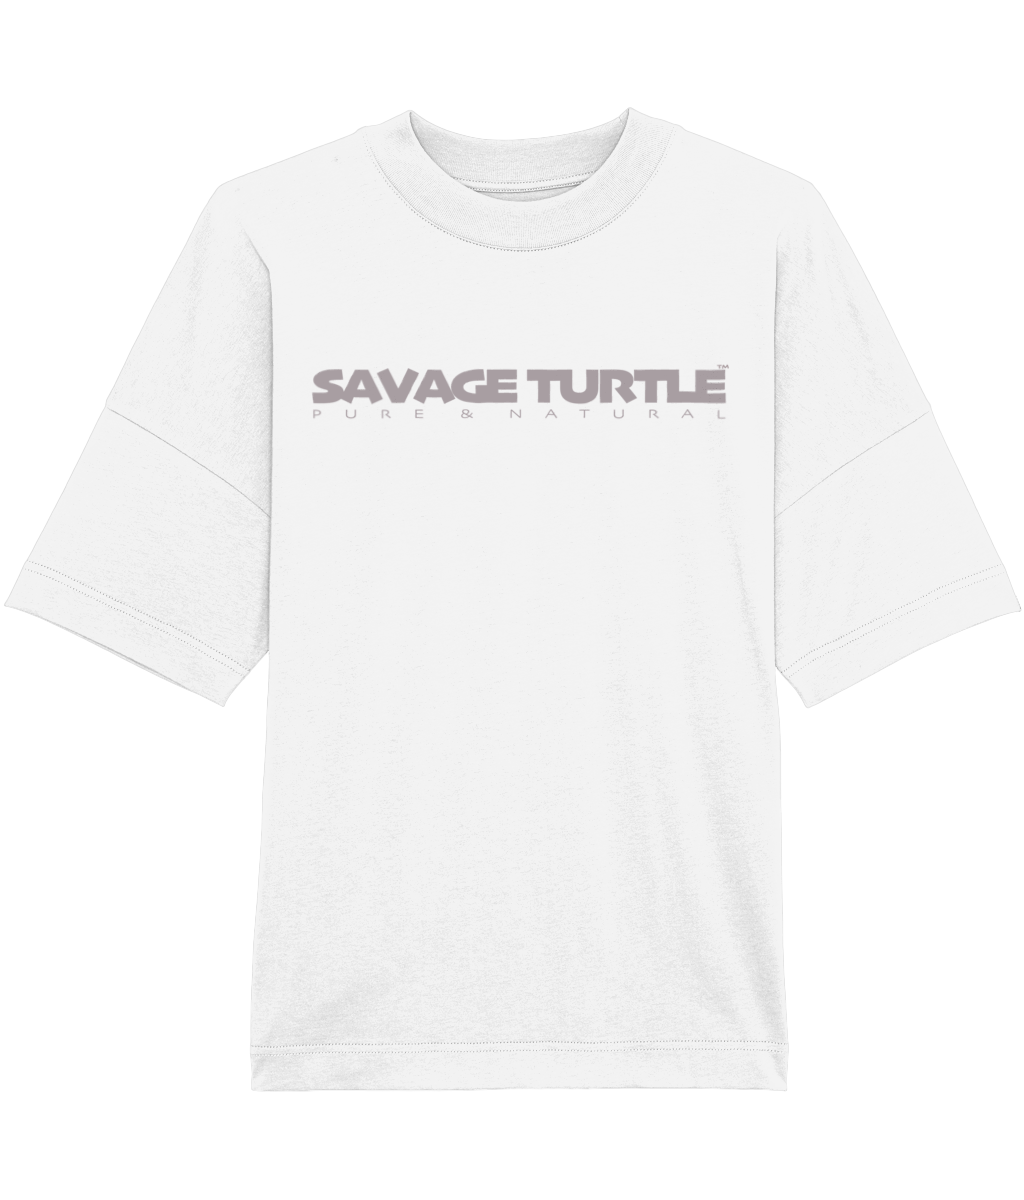 T-shirt White Oversized Savage Turtle Text